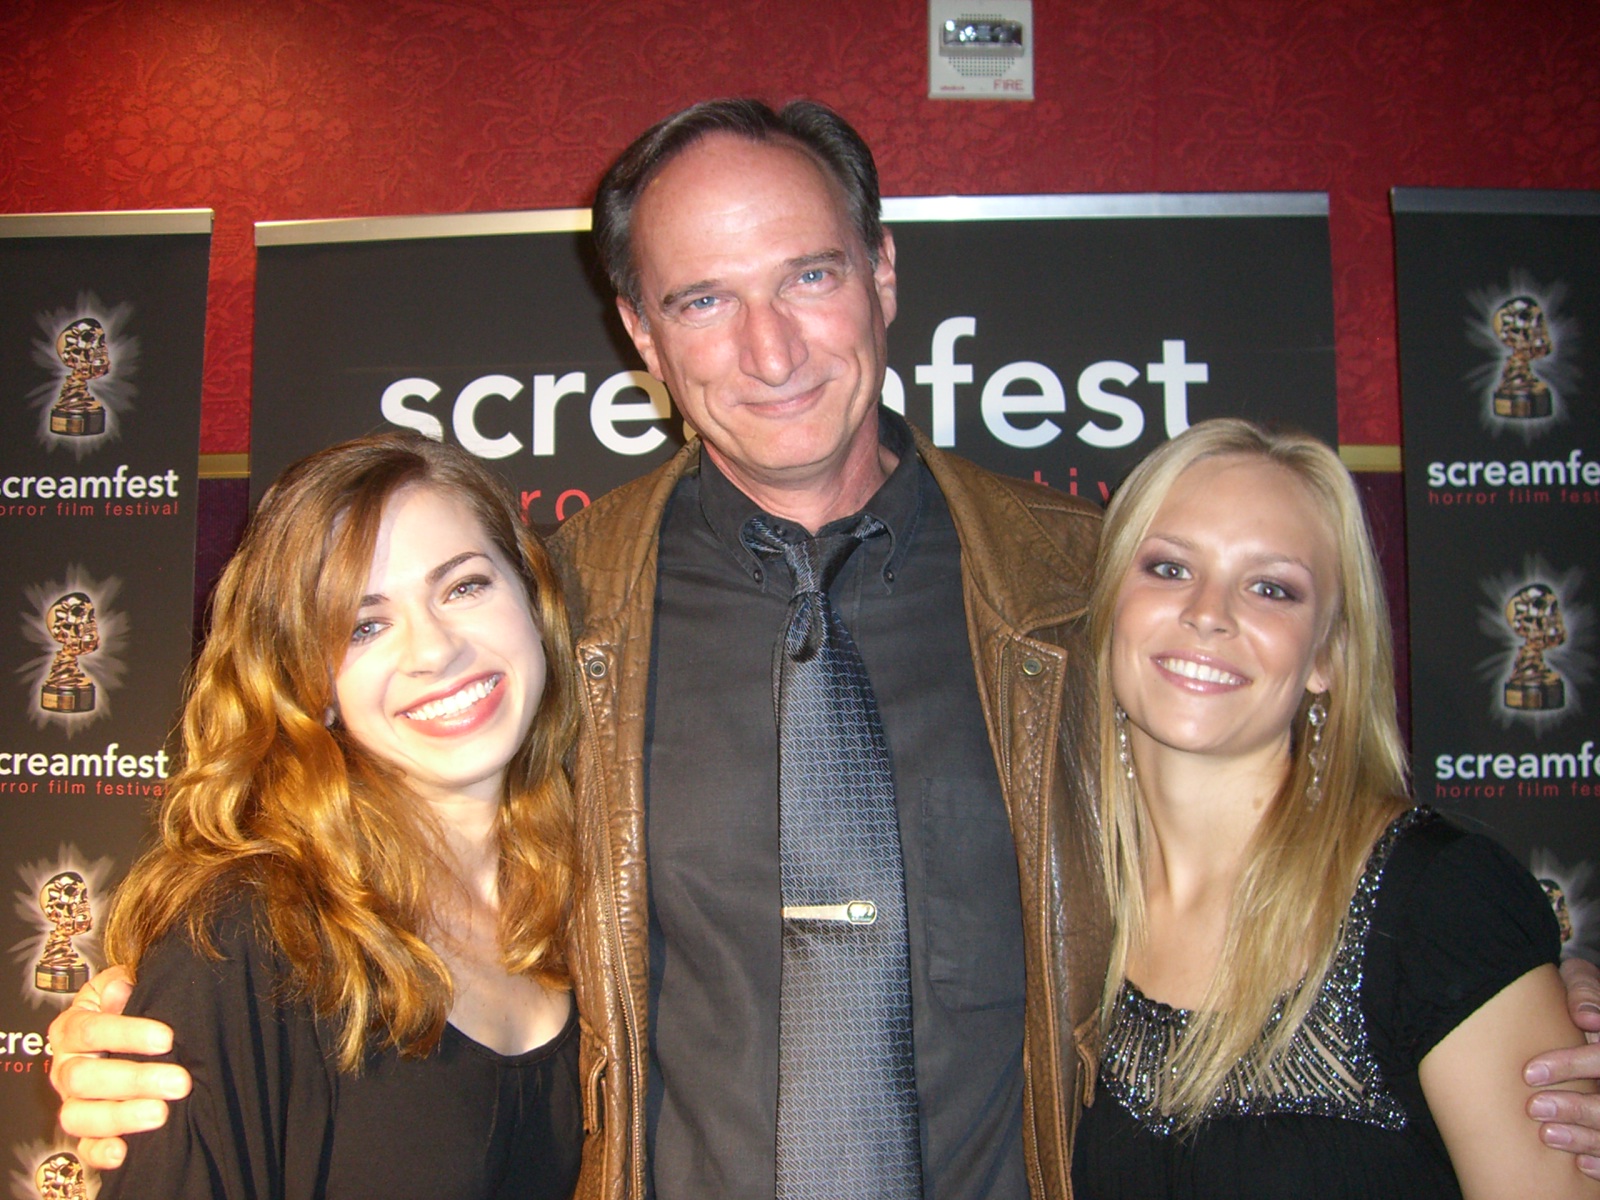 (L to R)Lizzie Prestel, M. Steven Felty, and Trish Coren at Screamfest for Headless Horseman.